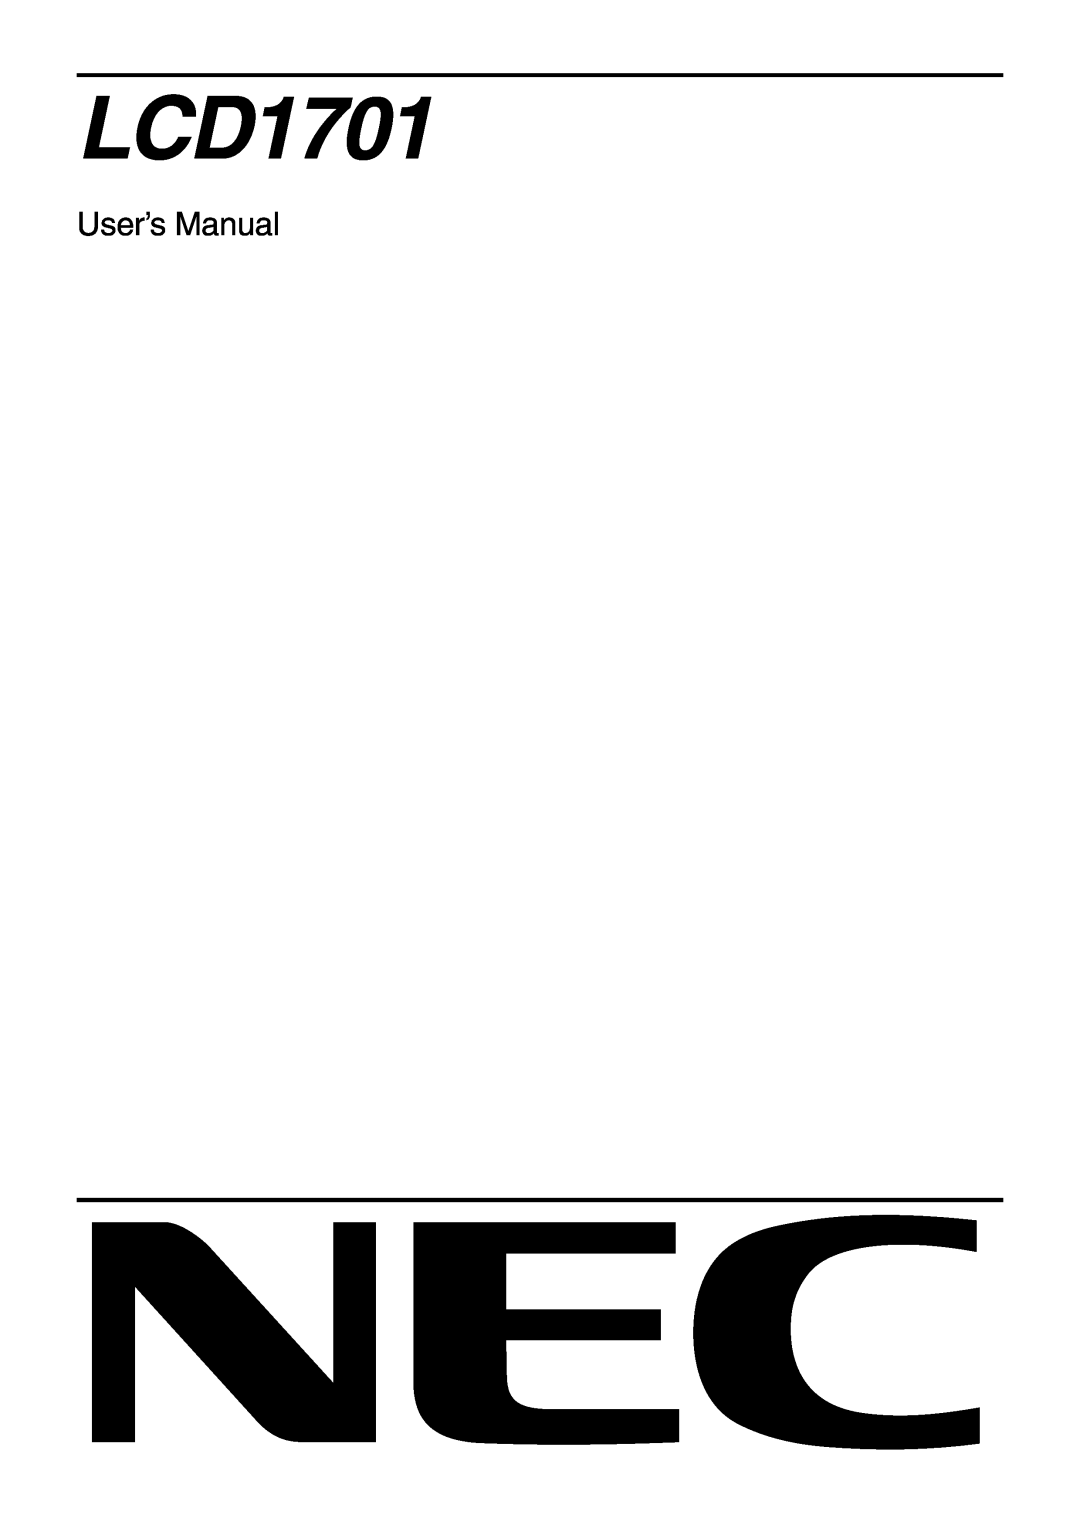 NEC LCD1701 user manual User’s Manual 